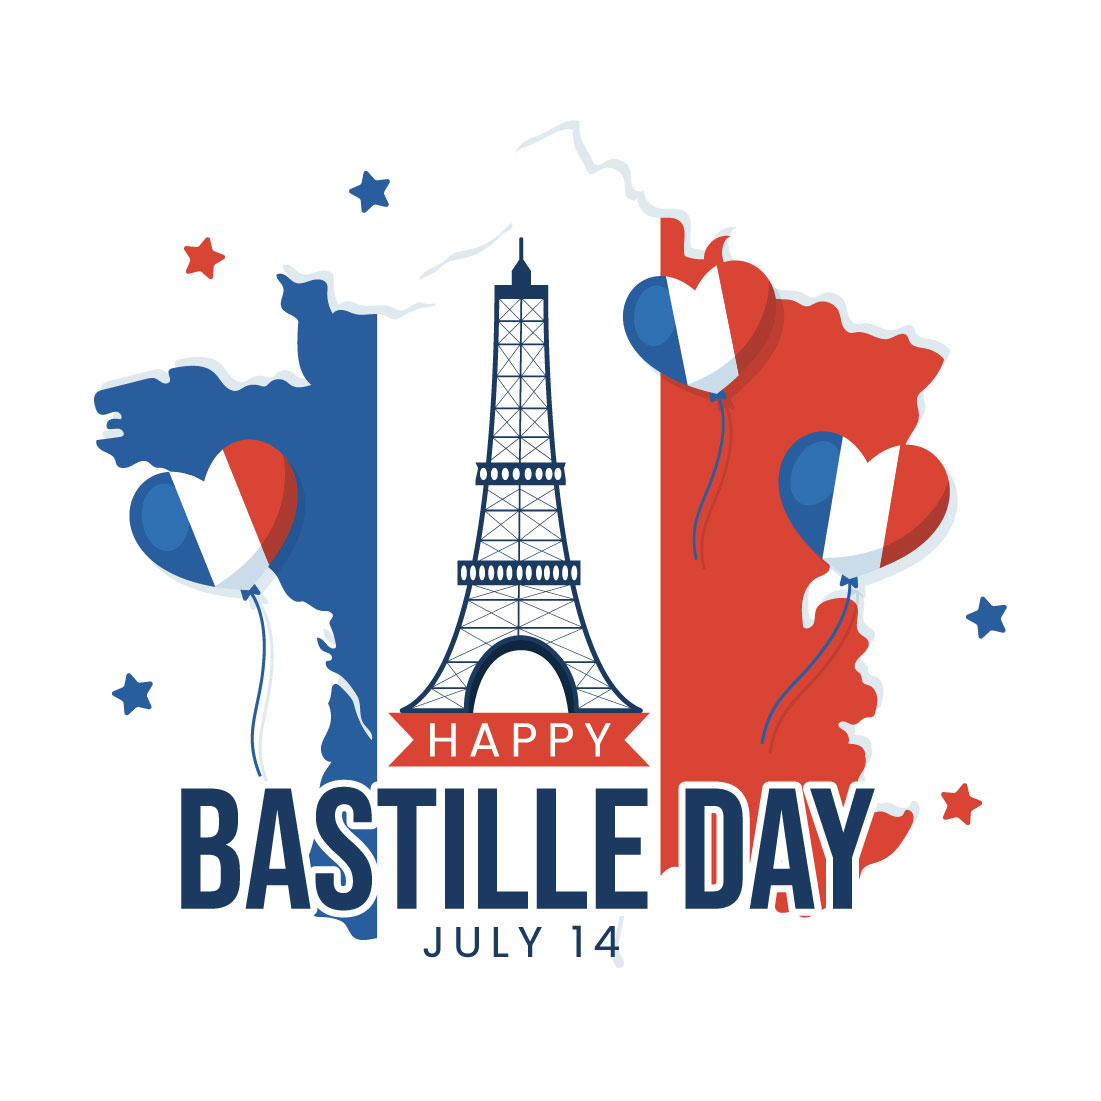 16 Happy Bastille Day Illustration cover image.